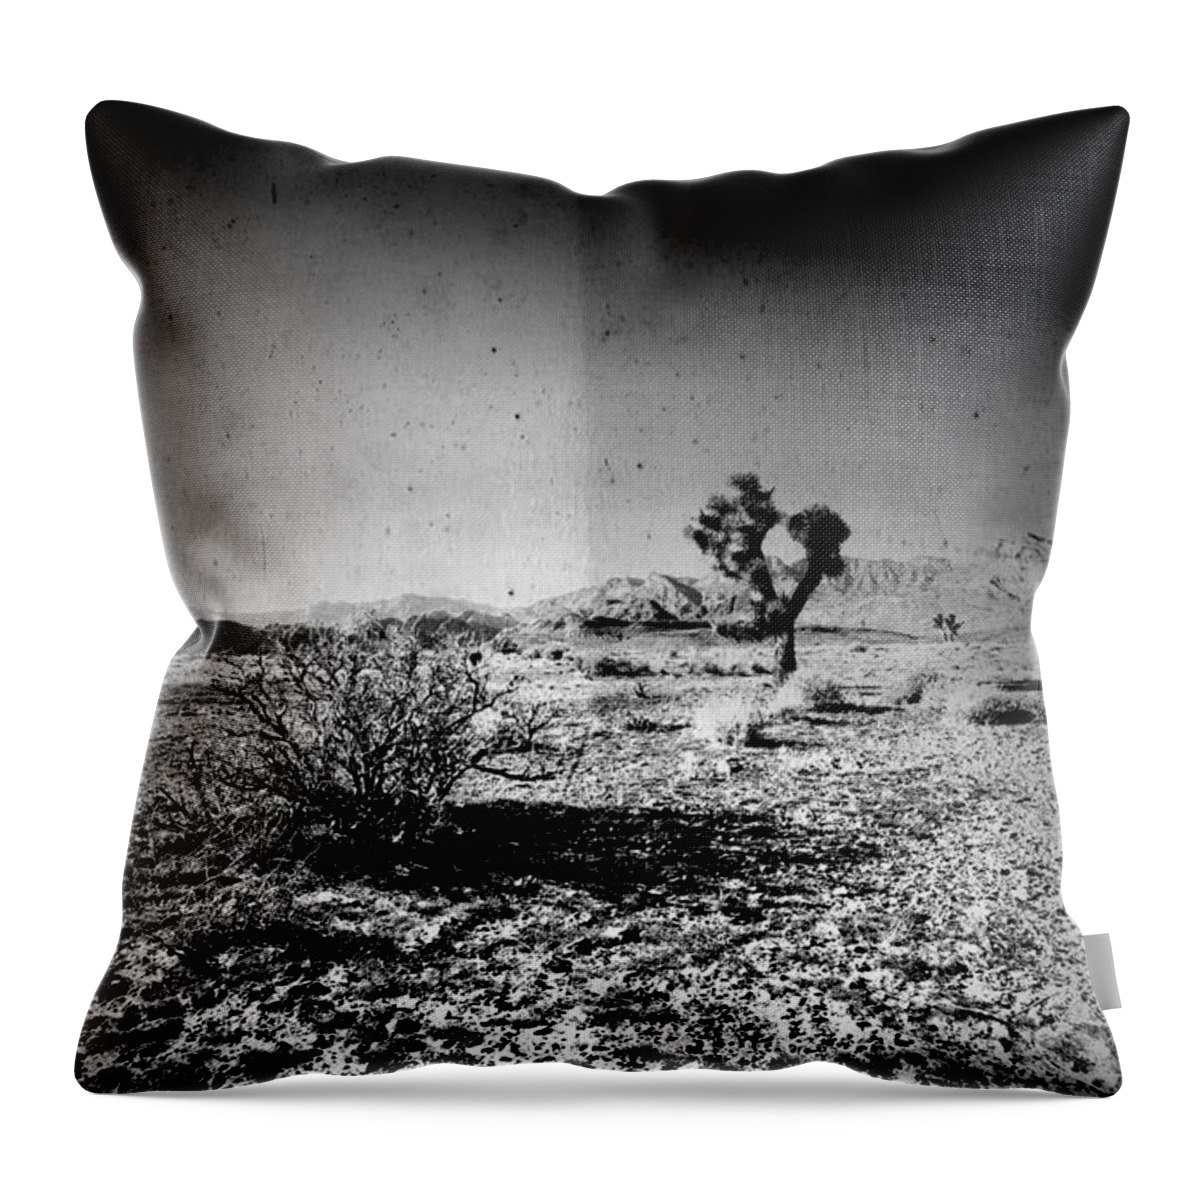 Desert Throw Pillow featuring the photograph Crawl by Mark Ross